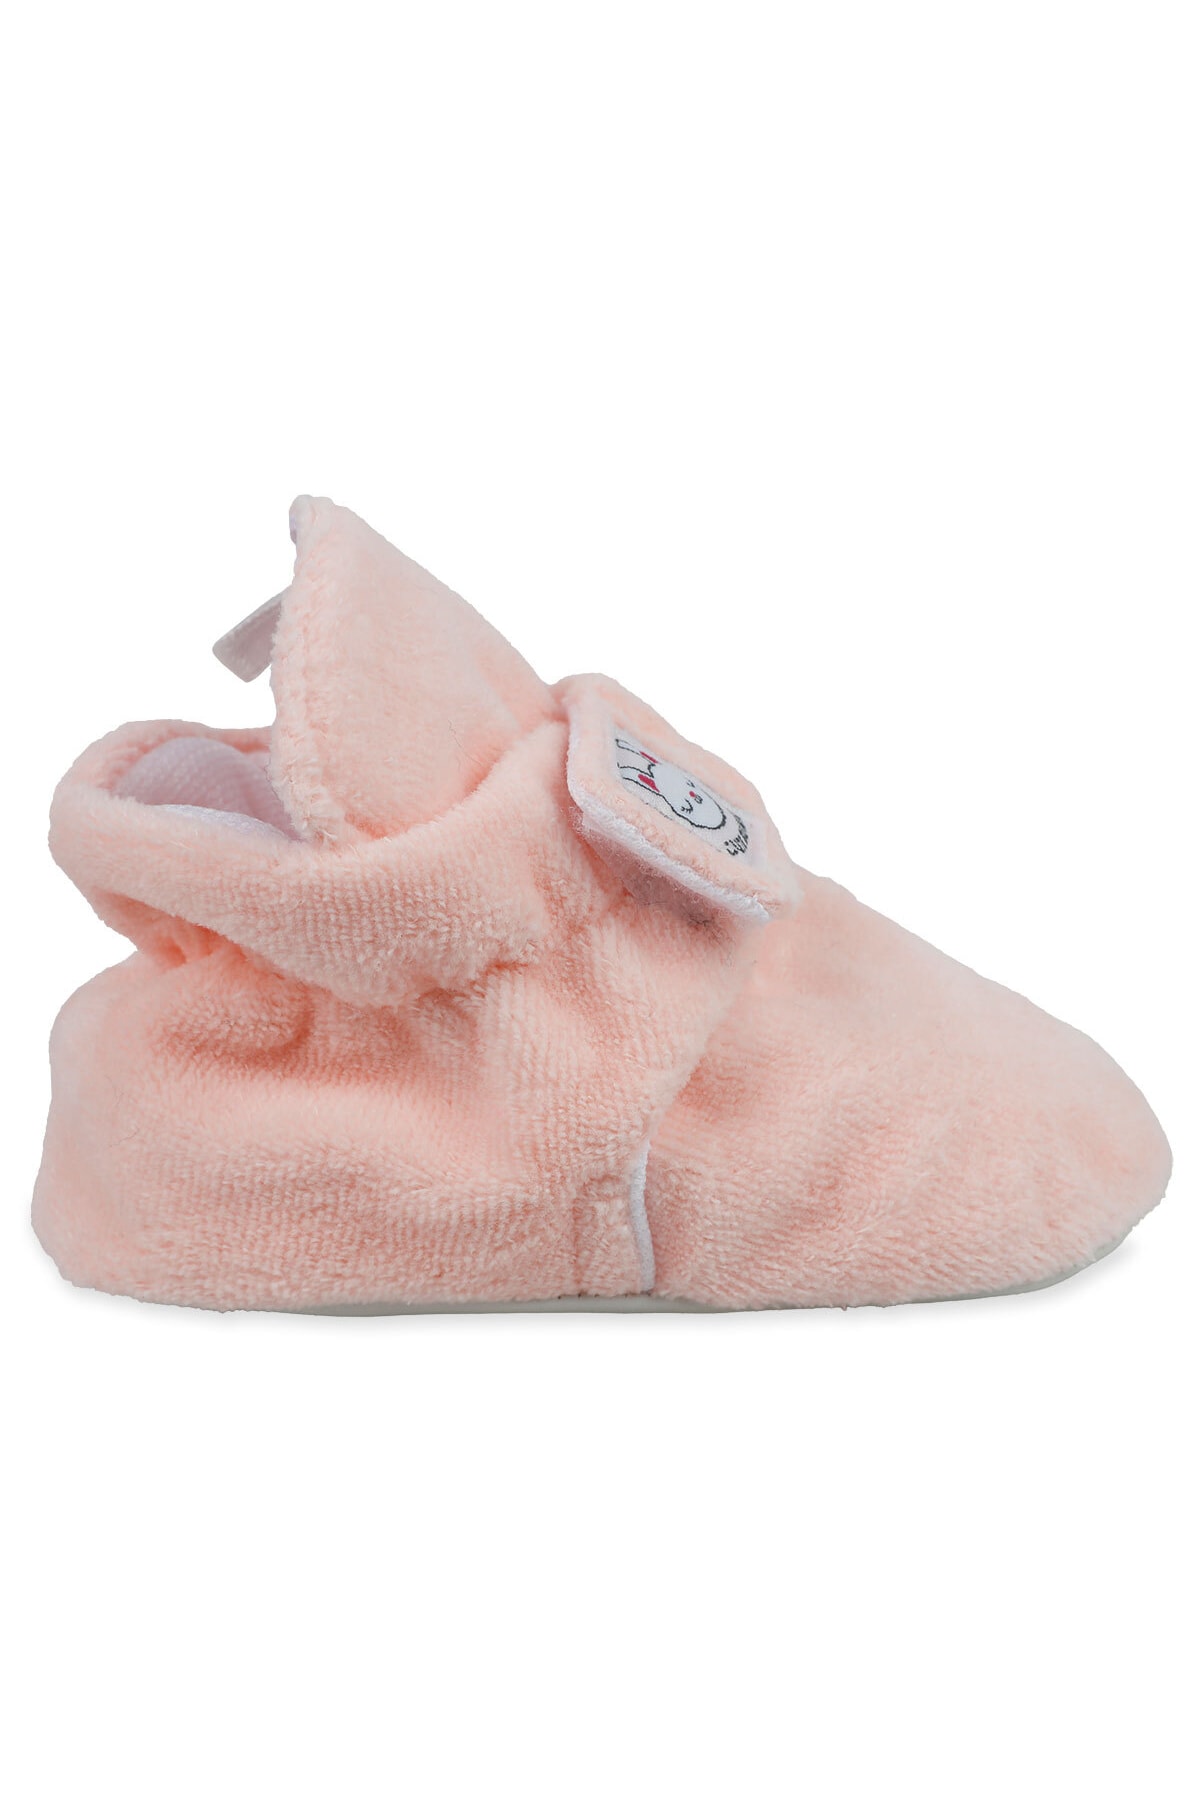 Civil Baby Kız Bebek Patik Ayakkabı 17-19 Numara Pudra